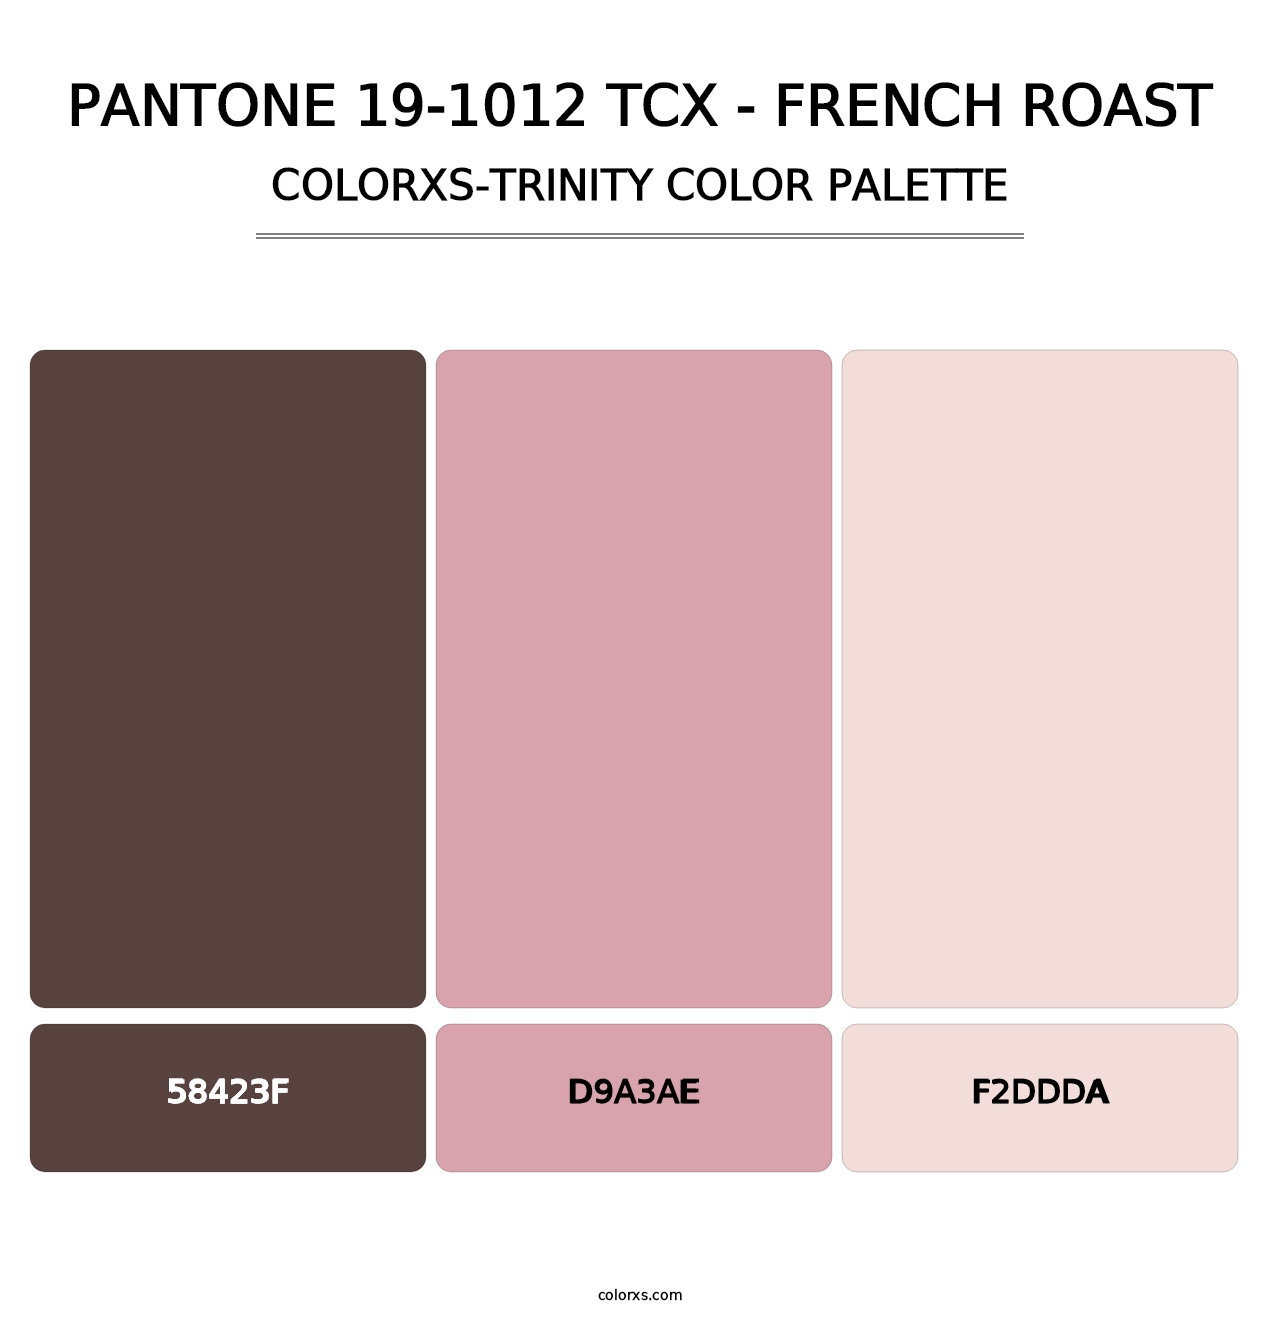 PANTONE 19-1012 TCX - French Roast - Colorxs Trinity Palette